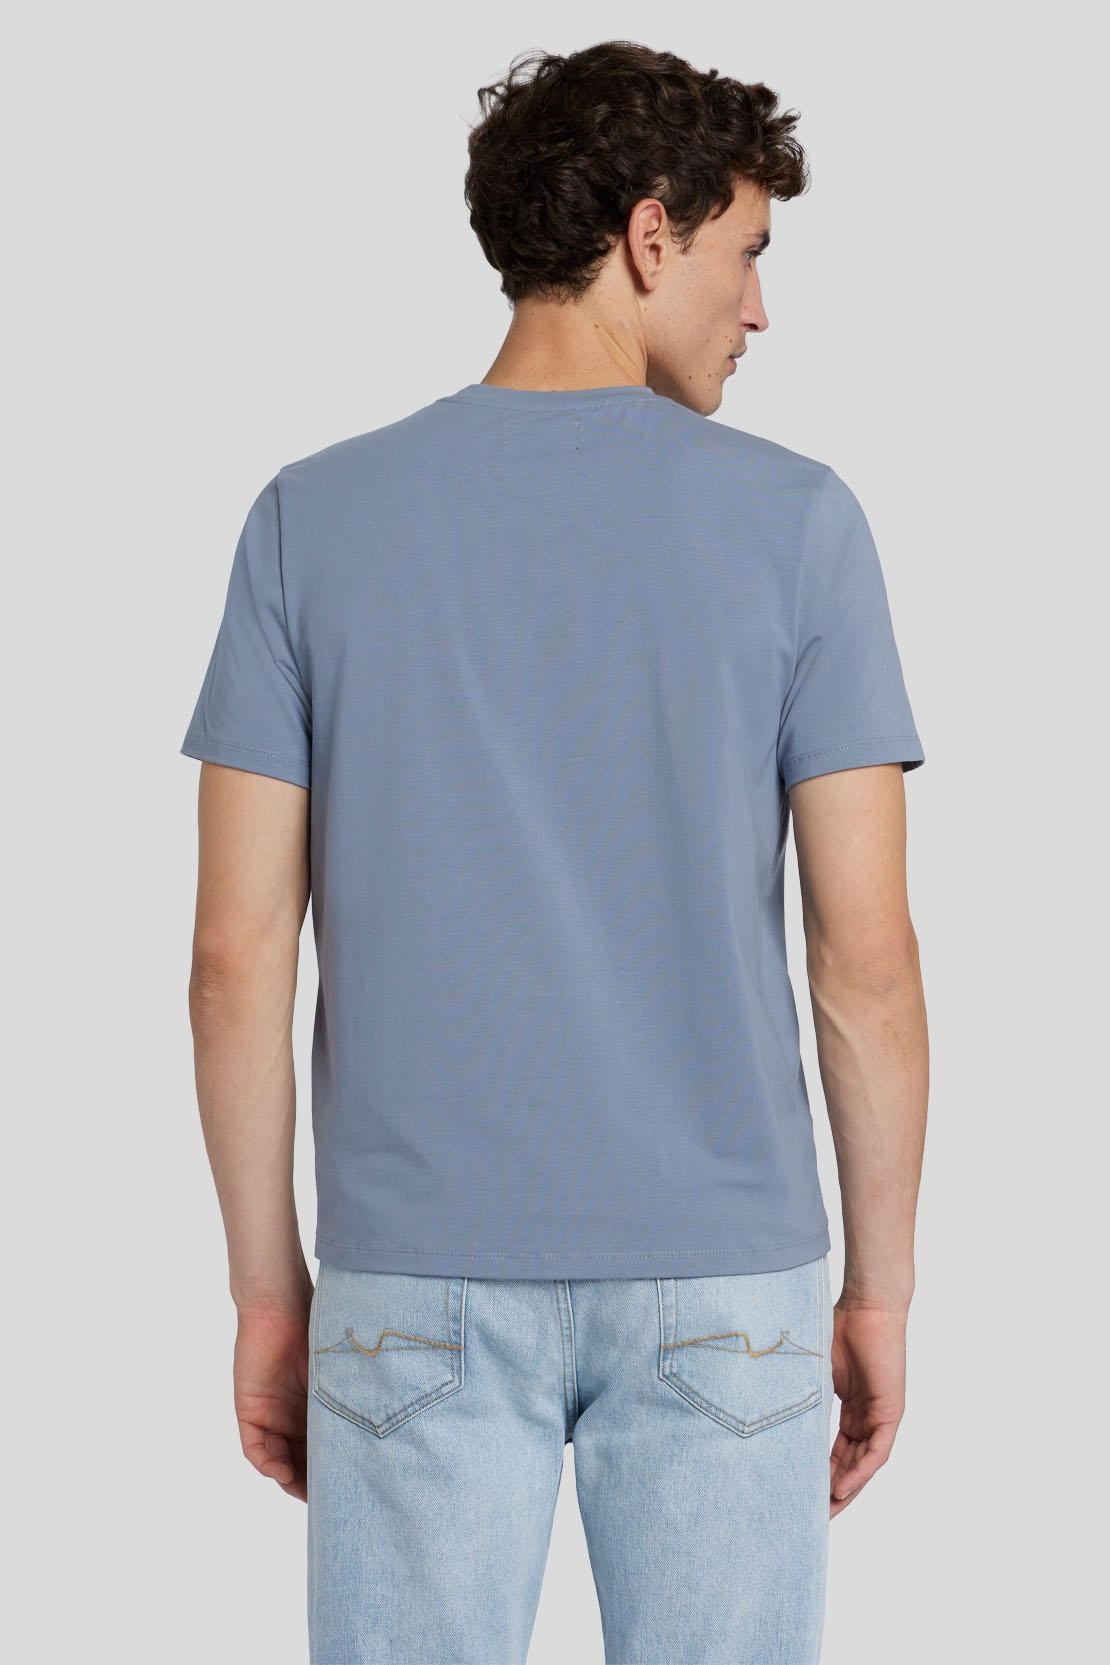 T-Shirt Luxe Performance Dusty Blue_JSIM2370DB_DB_04